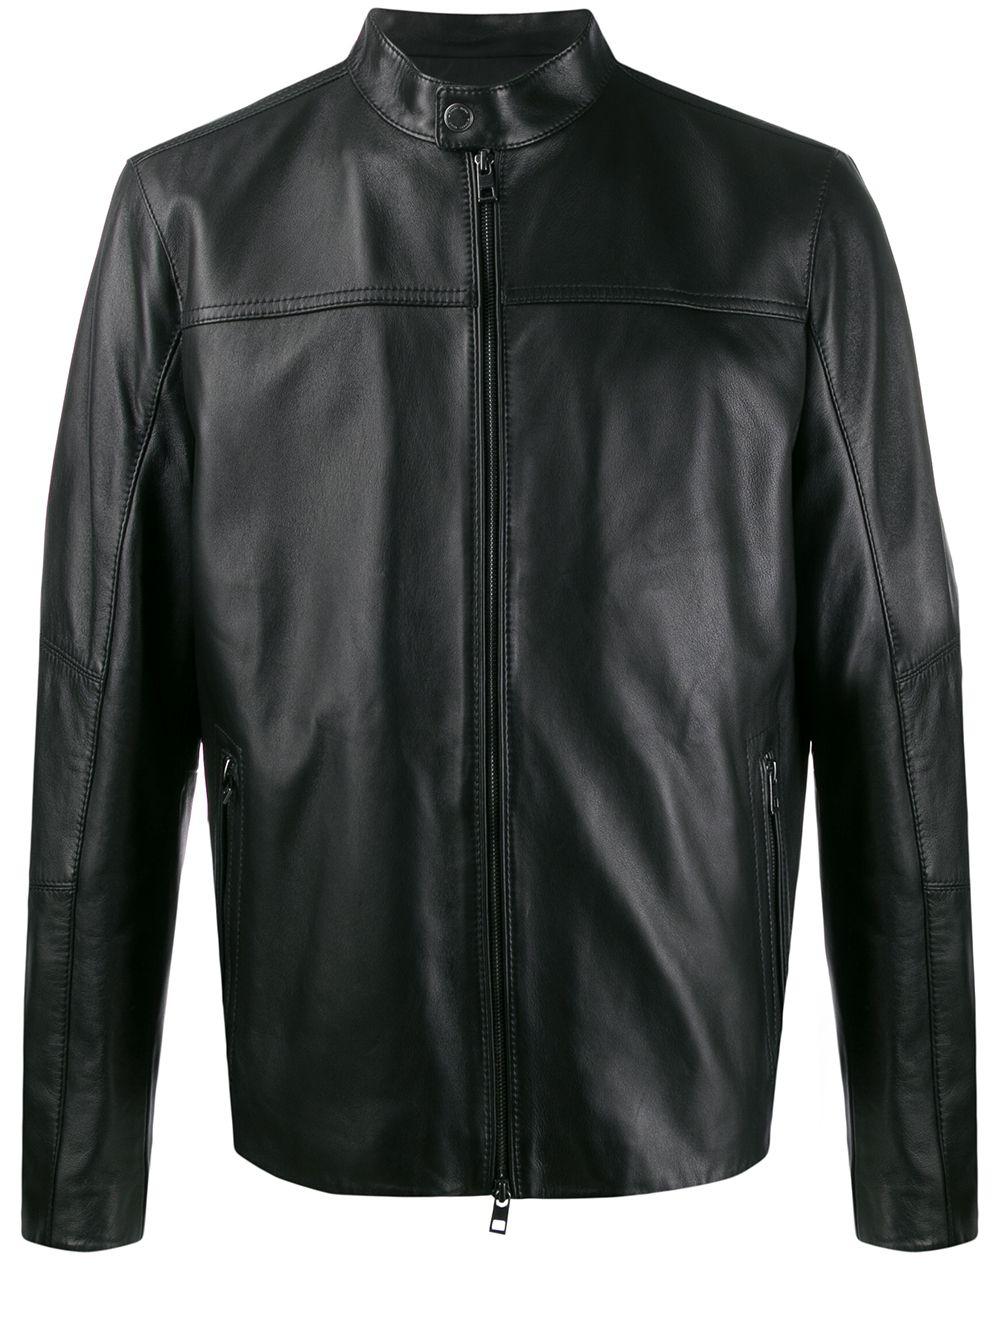 Michael Kors Zip-front Leather Jacket in Black for Men - Lyst